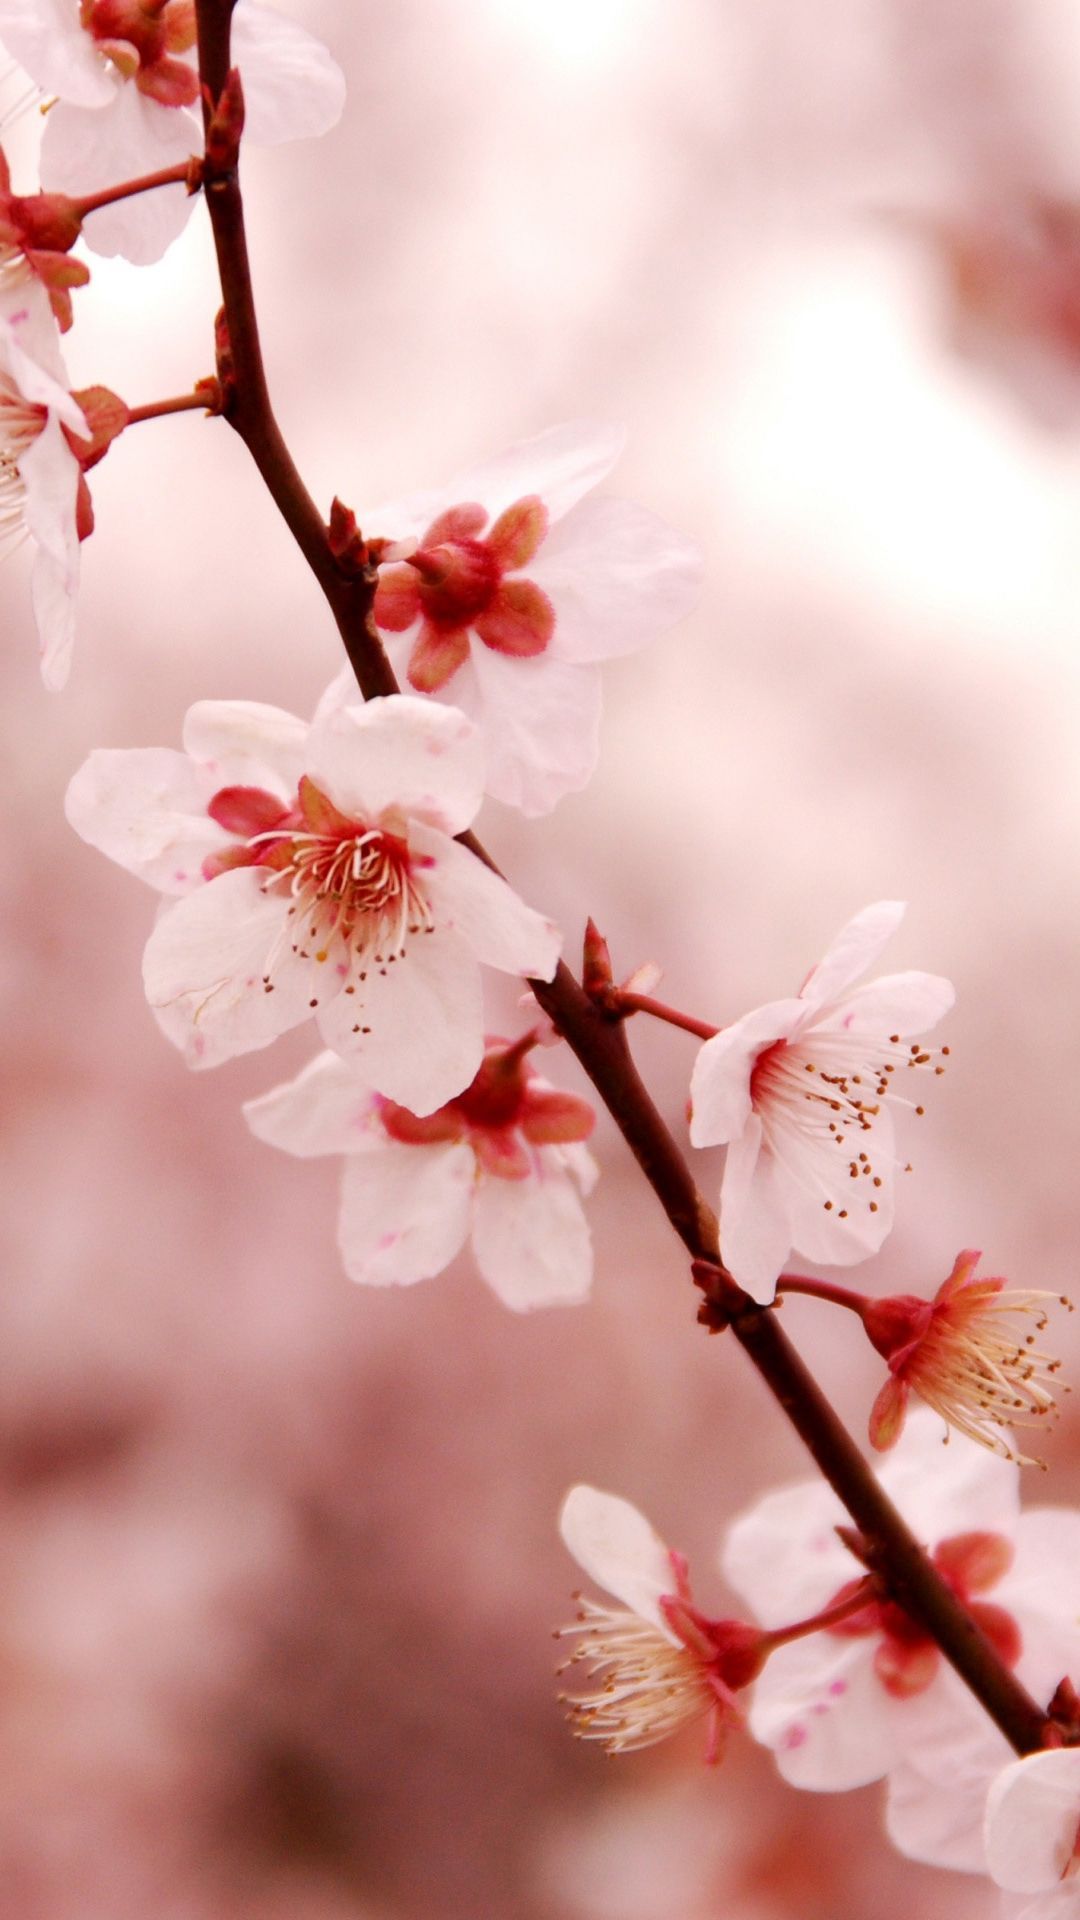 Cherry Blossom iPhone Wallpaper Download Free. Cherry blossom wallpaper, Cherry blossom background, Sakura flower